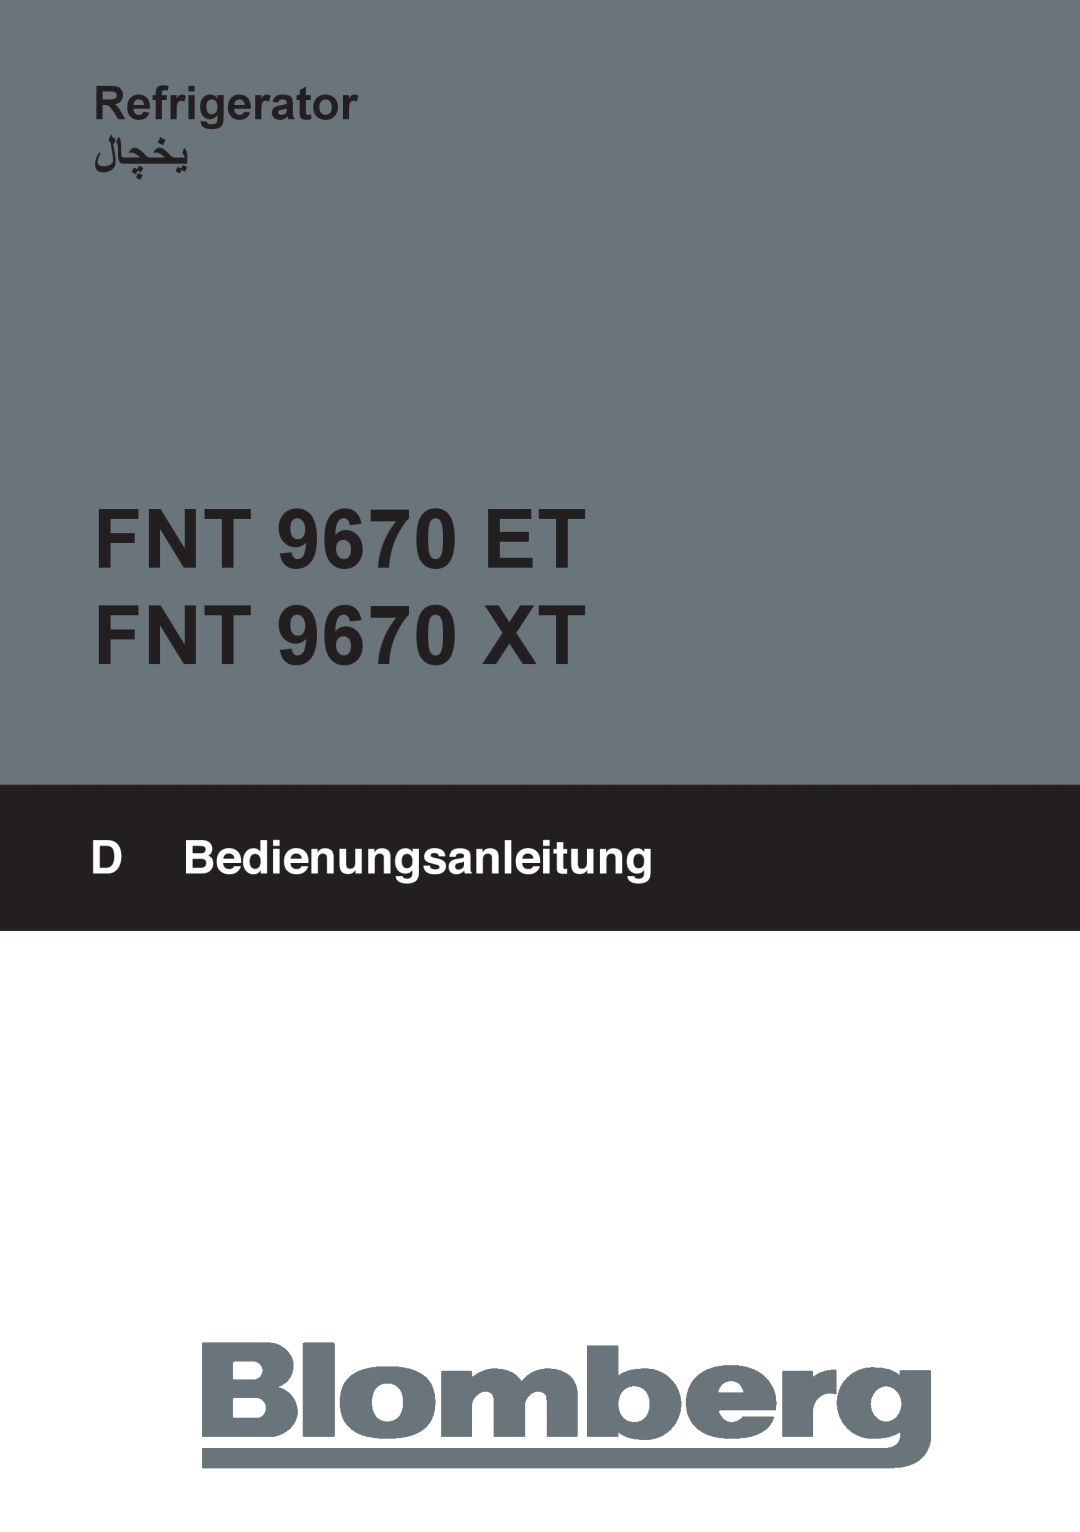 Blomberg manual FNT 9670 ET FNT 9670 XT, Refrigerator لاچخی, DBedienungsanleitung 